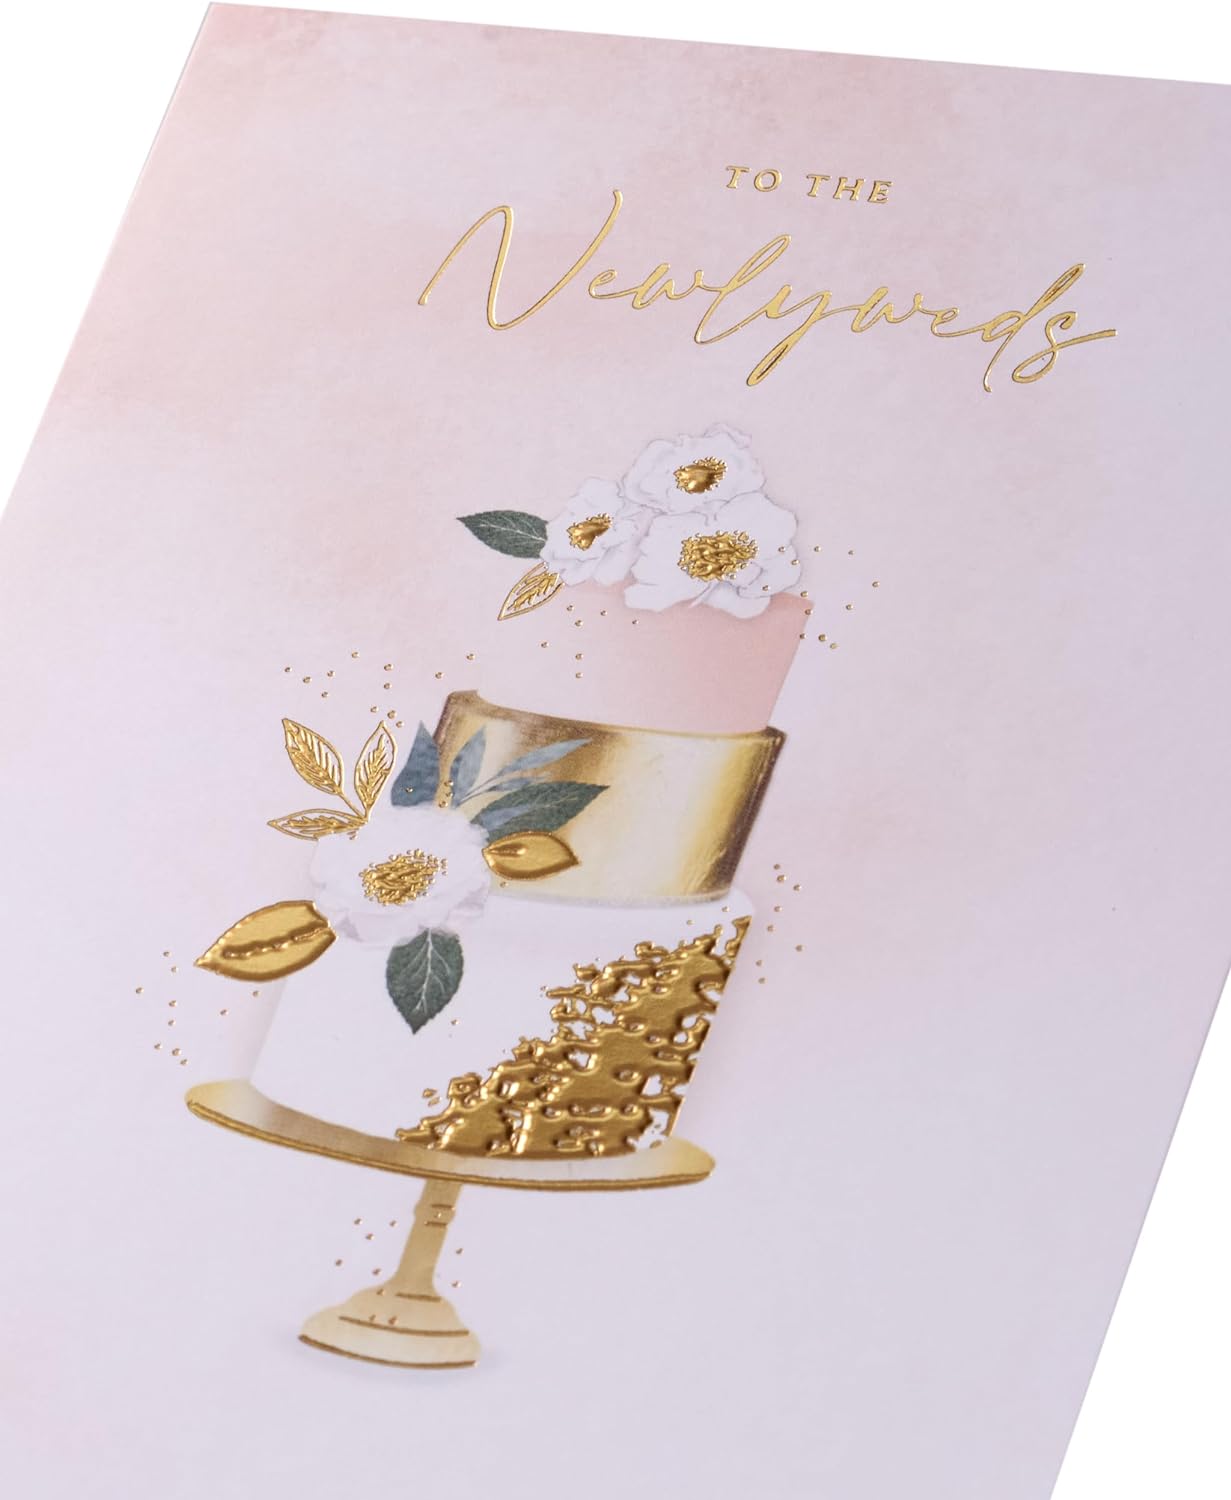 Stylish Cake Design Wedding Day Card